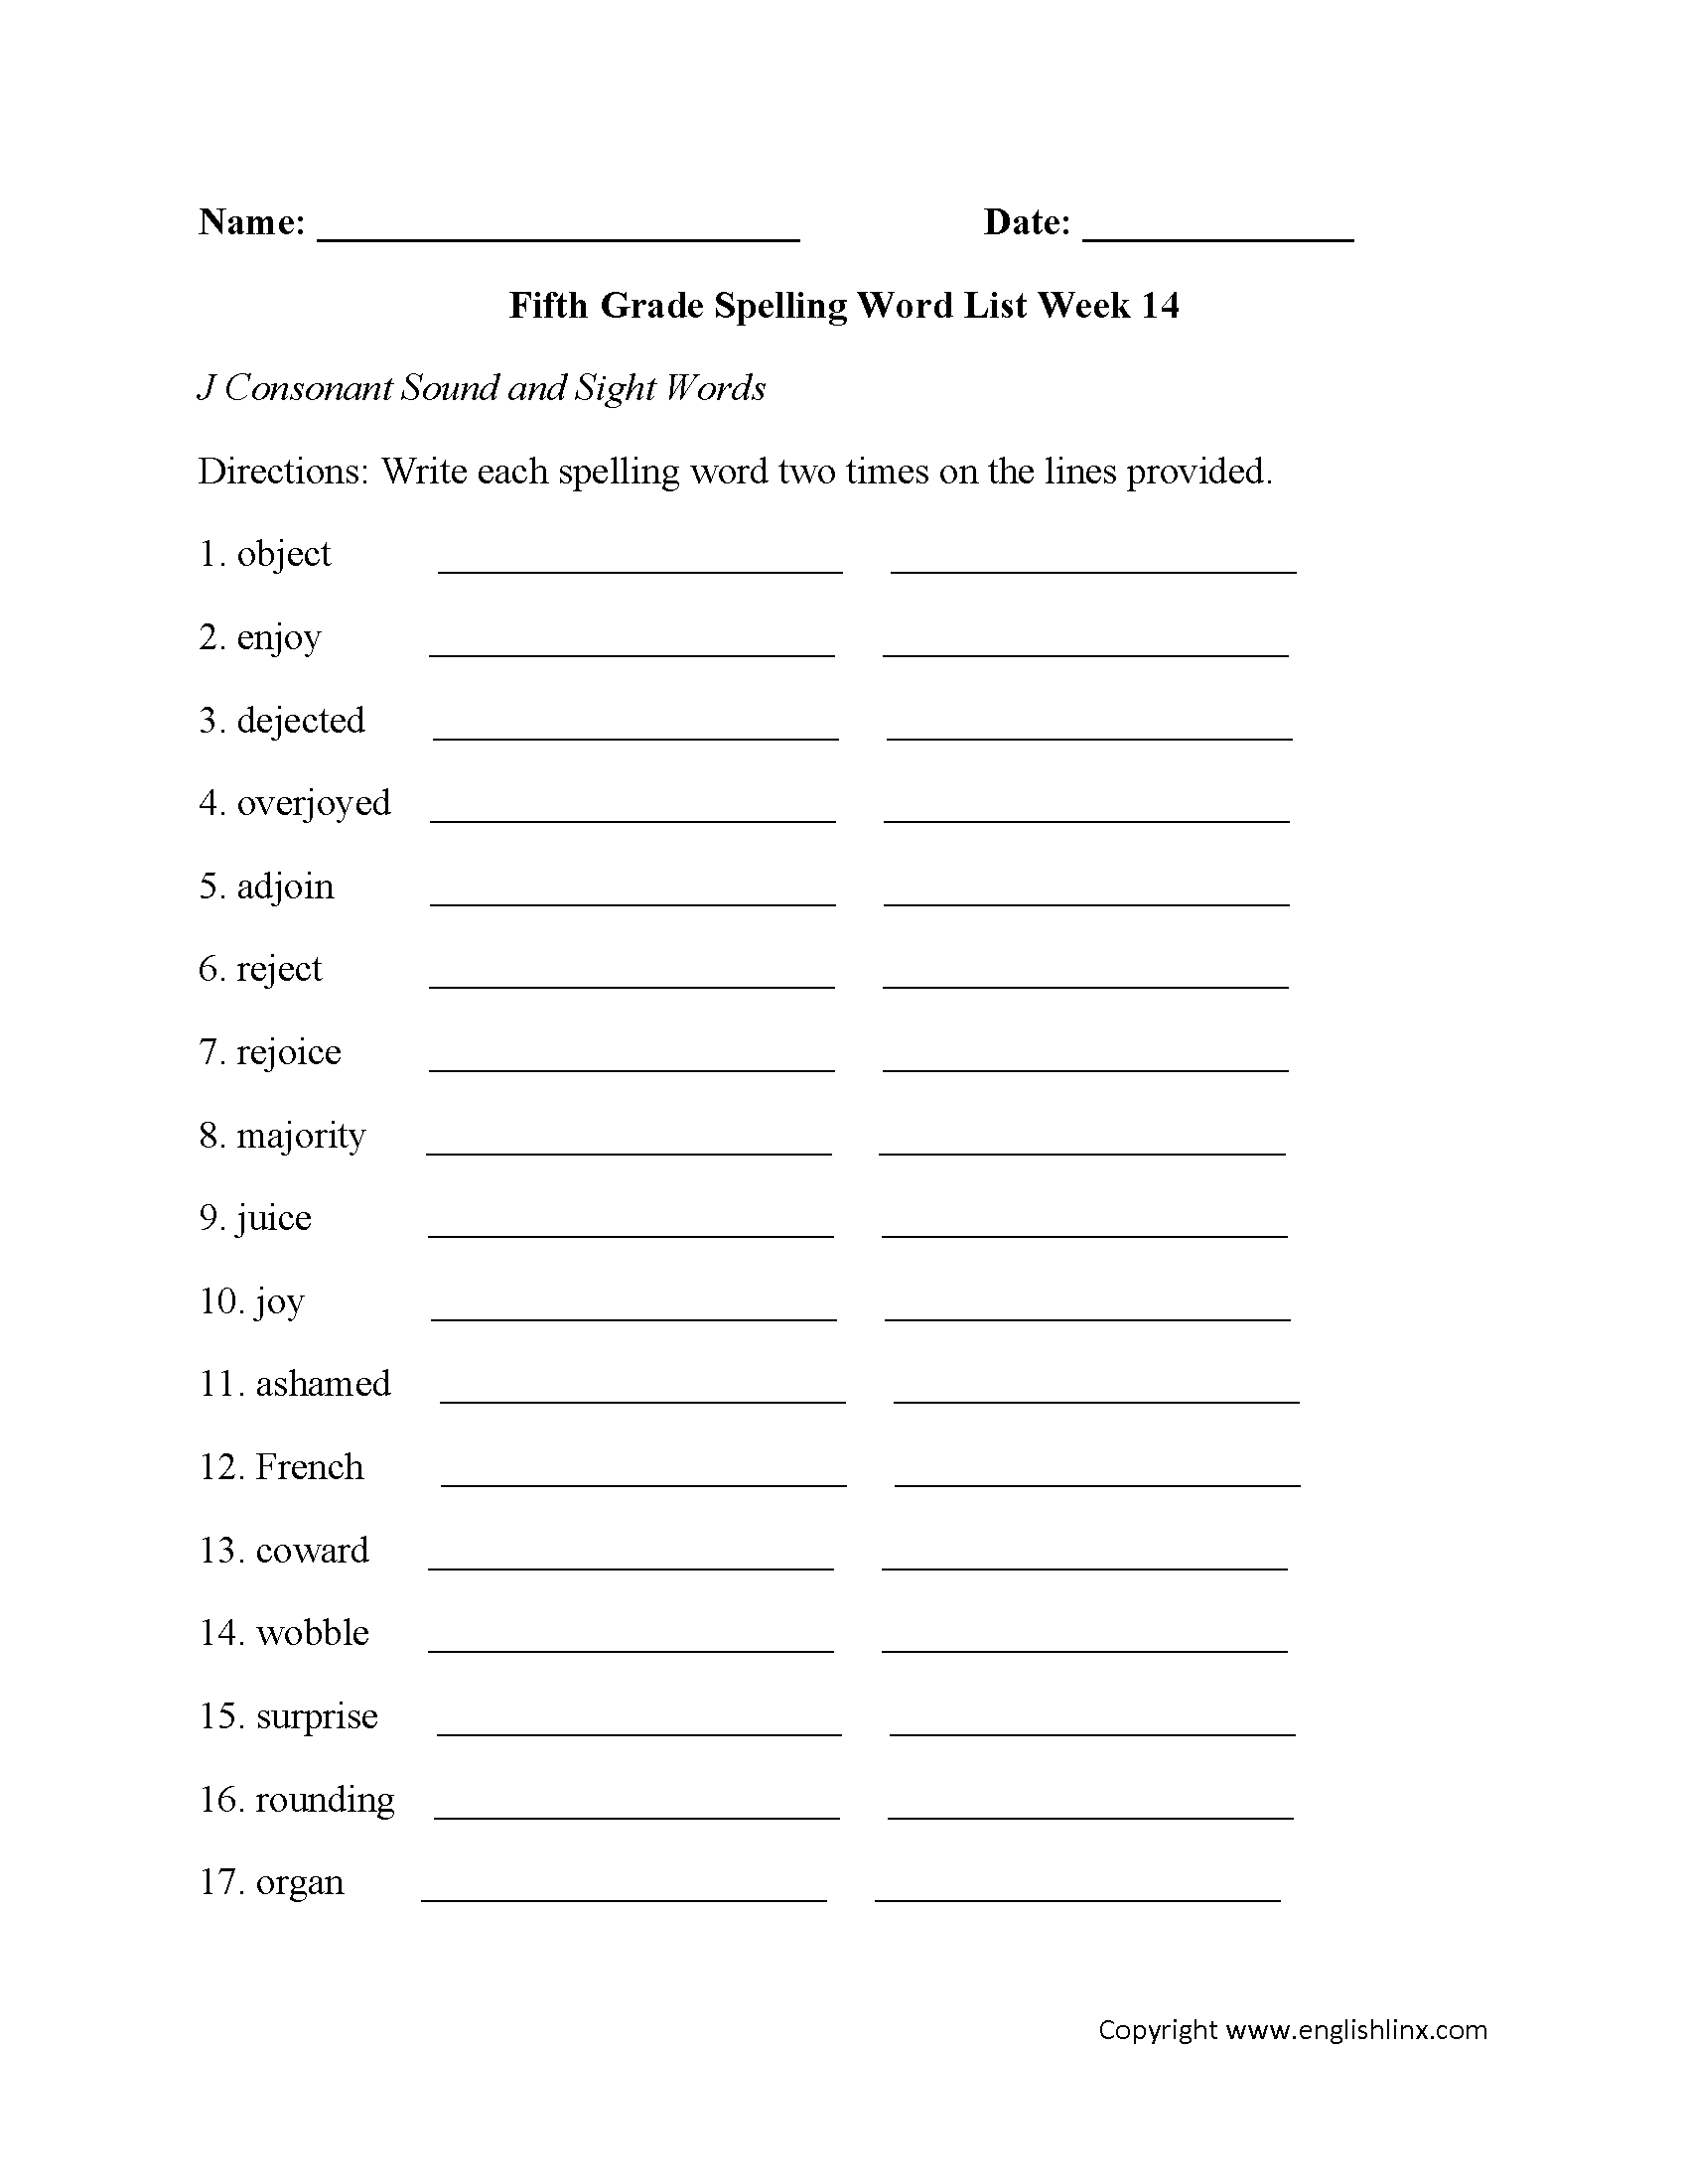 Week 14 J Consonant and Sight Words Fifth Grade Spelling Words Worksheets